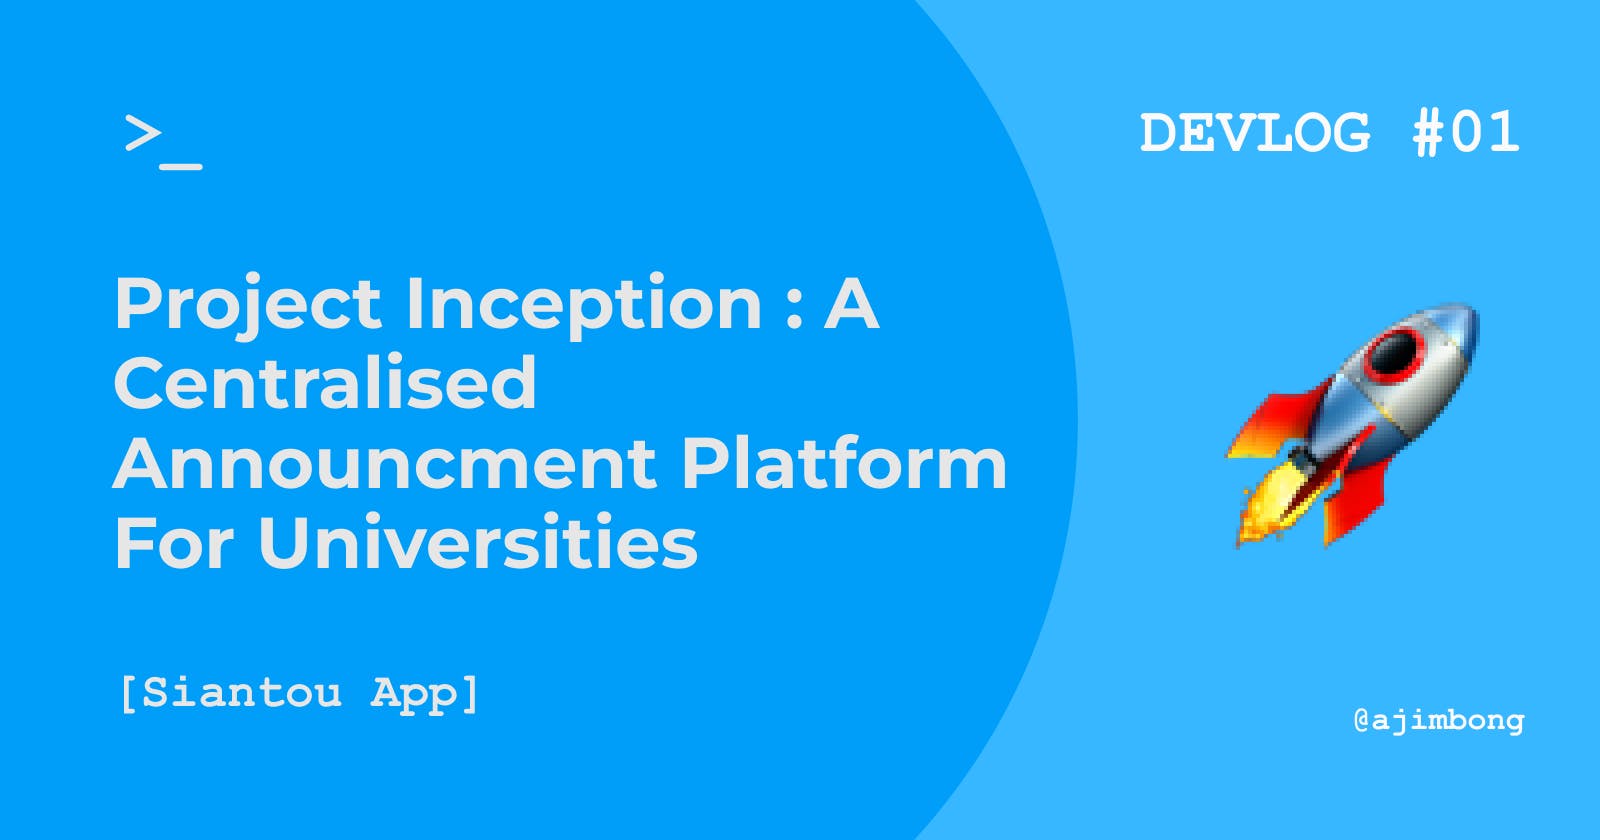 Project Inception: A Centralized Announcement Platform for Universities